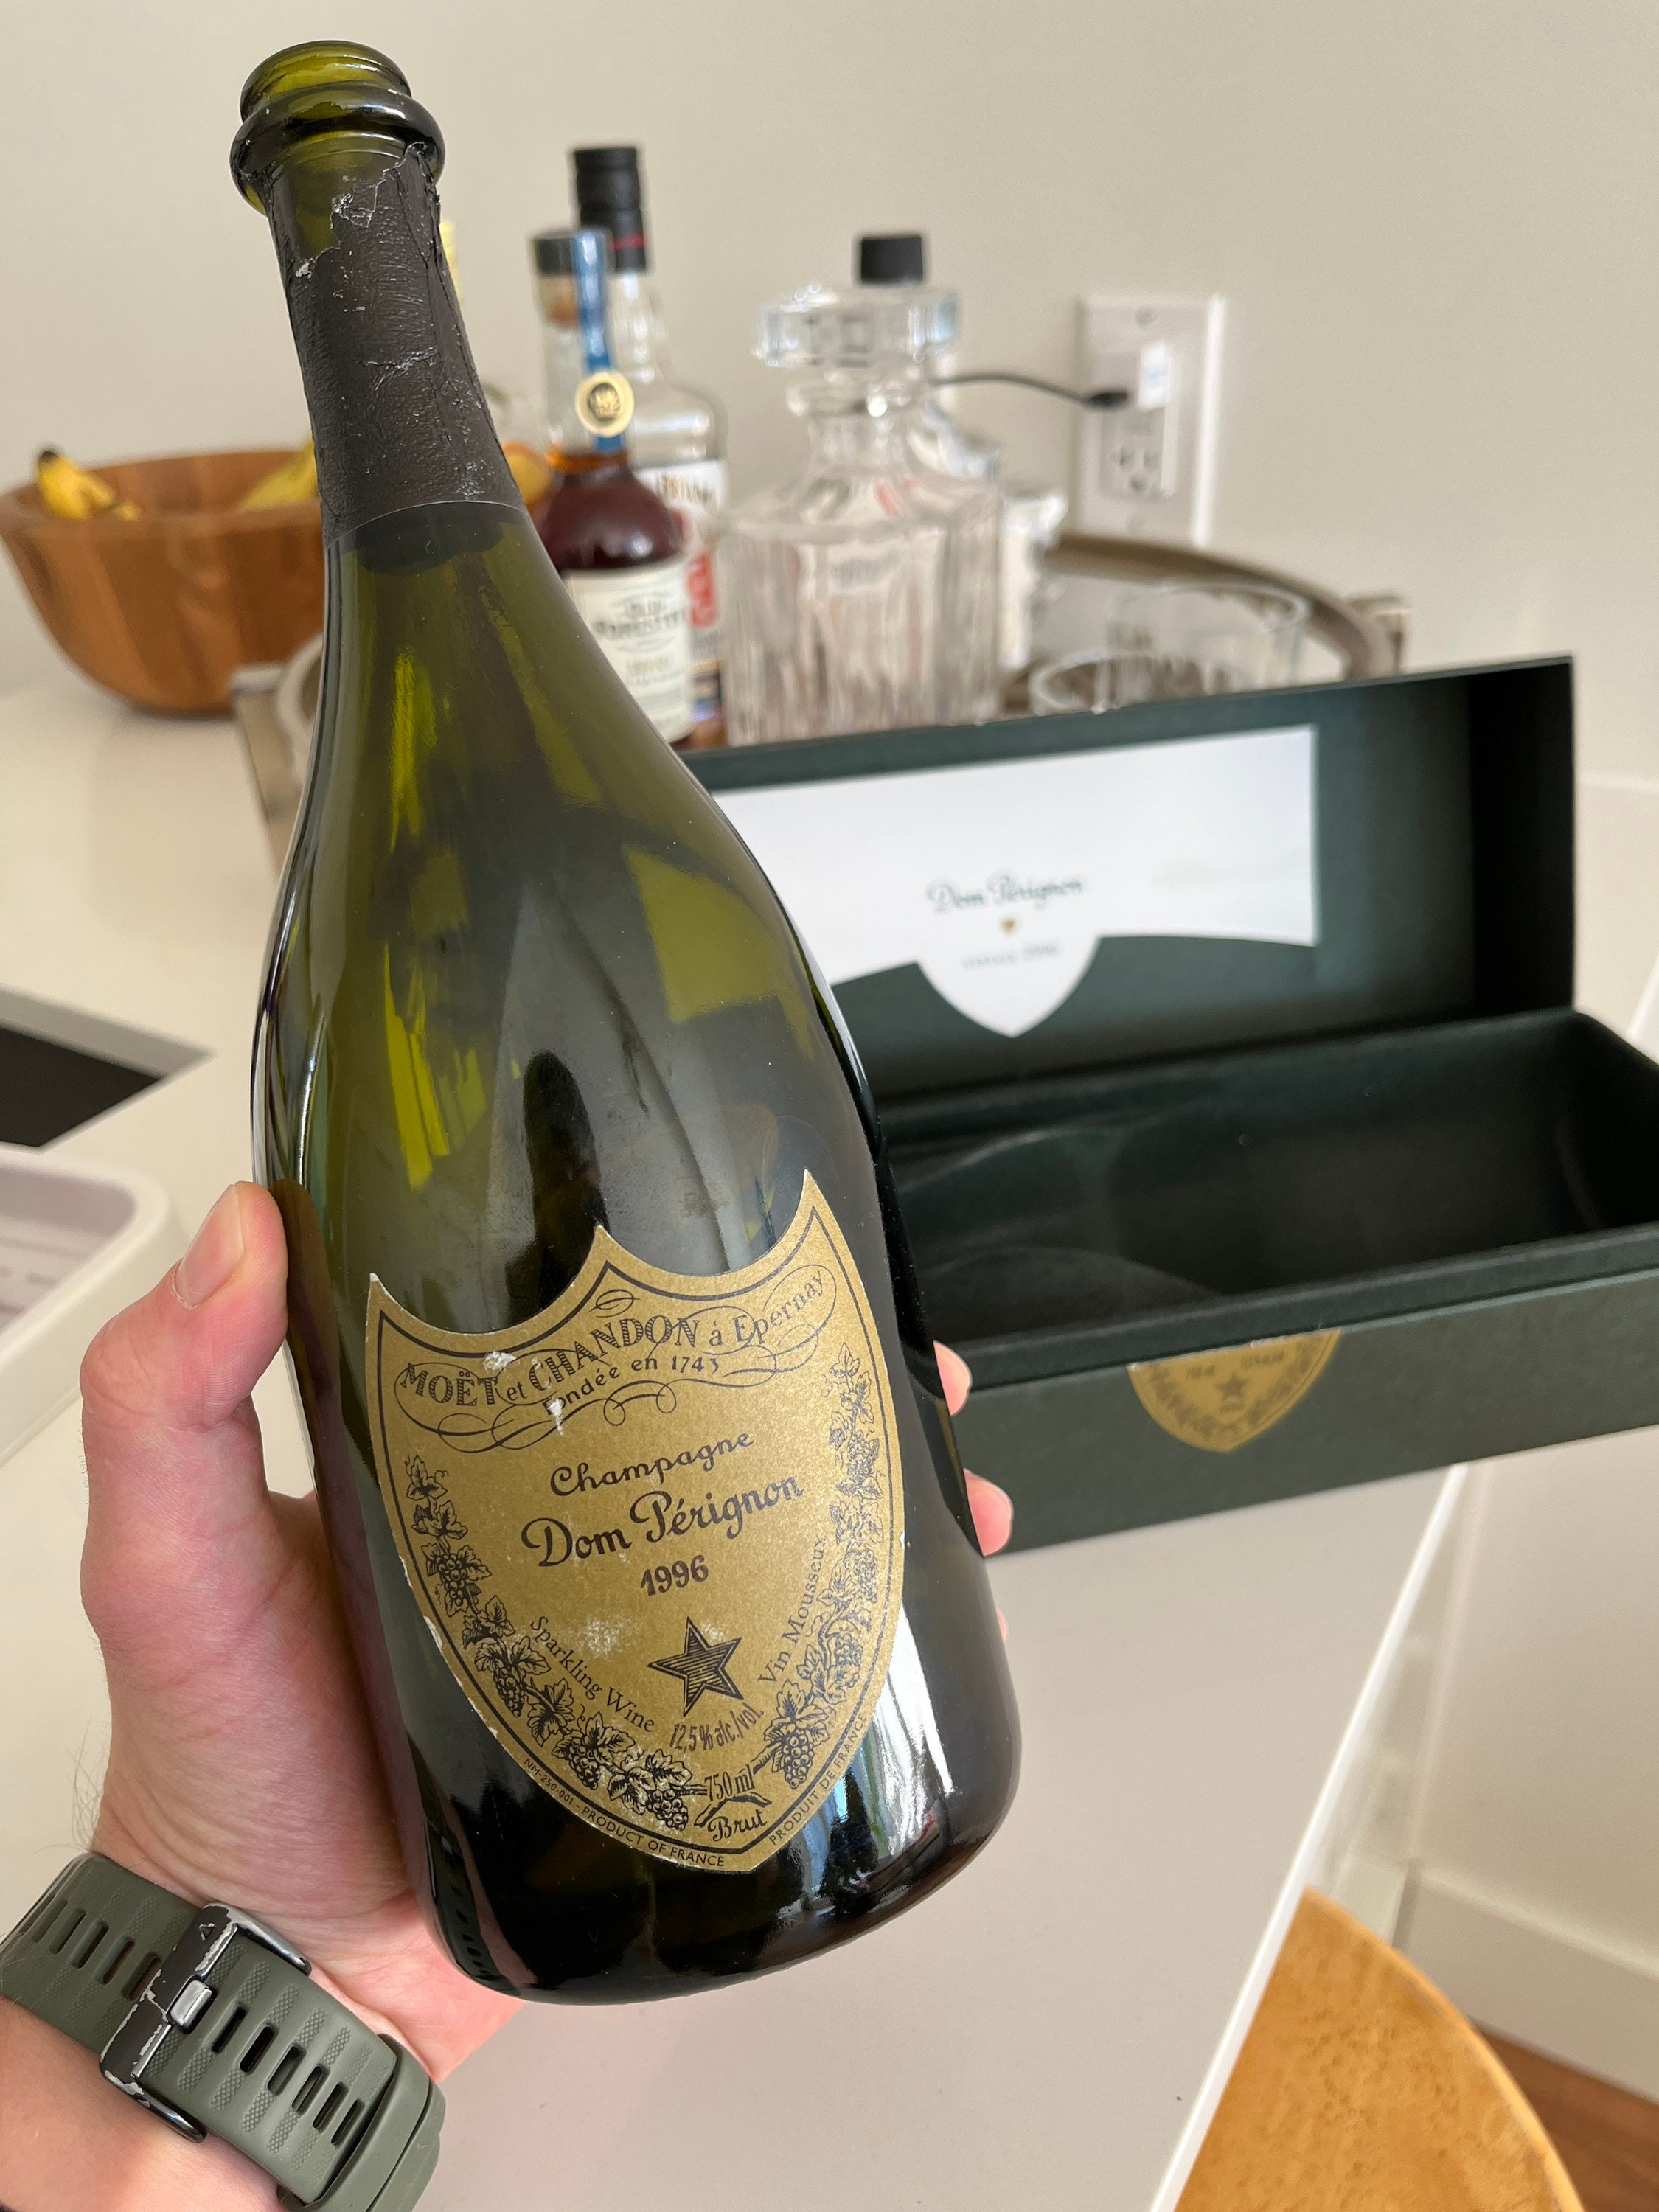 JEROBOAM dom Perignon luminous champagne Bottle EMPTY 750mL(JUST 1 BOTTLE)